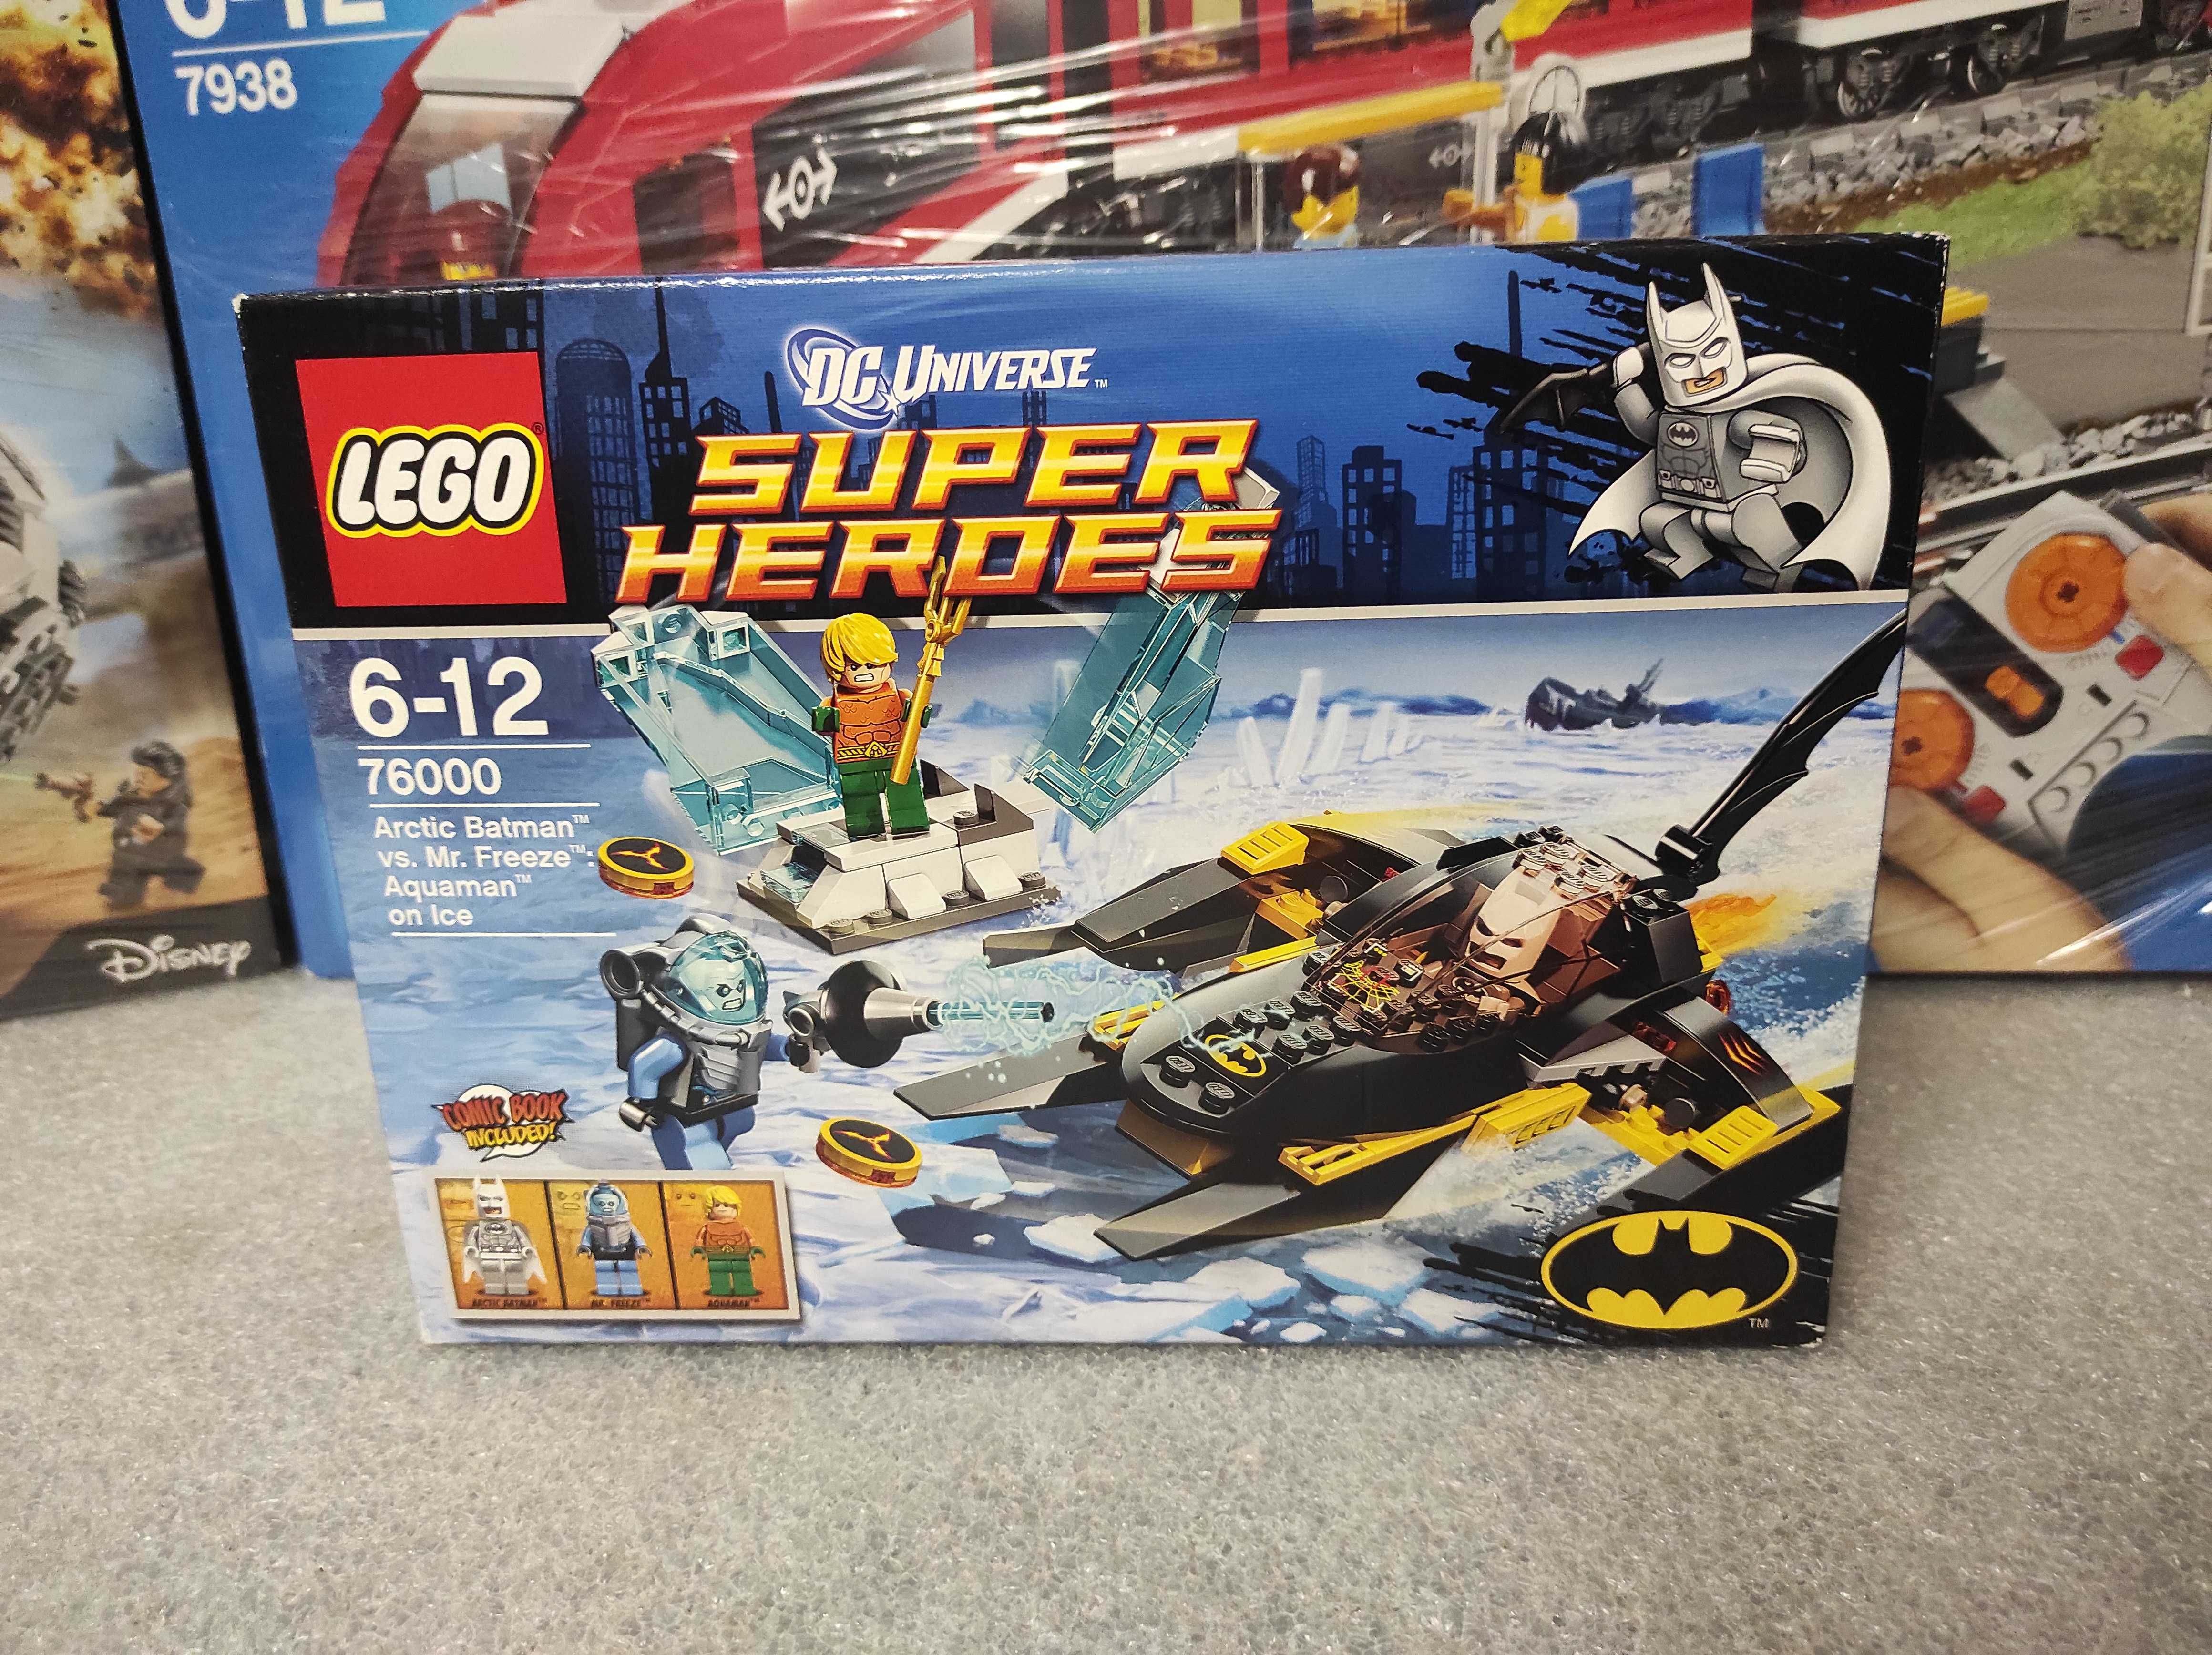 LEGO 76000 Artic Batman Vs Mr Freeze Aquaman On Ice Novo e Selado 2013